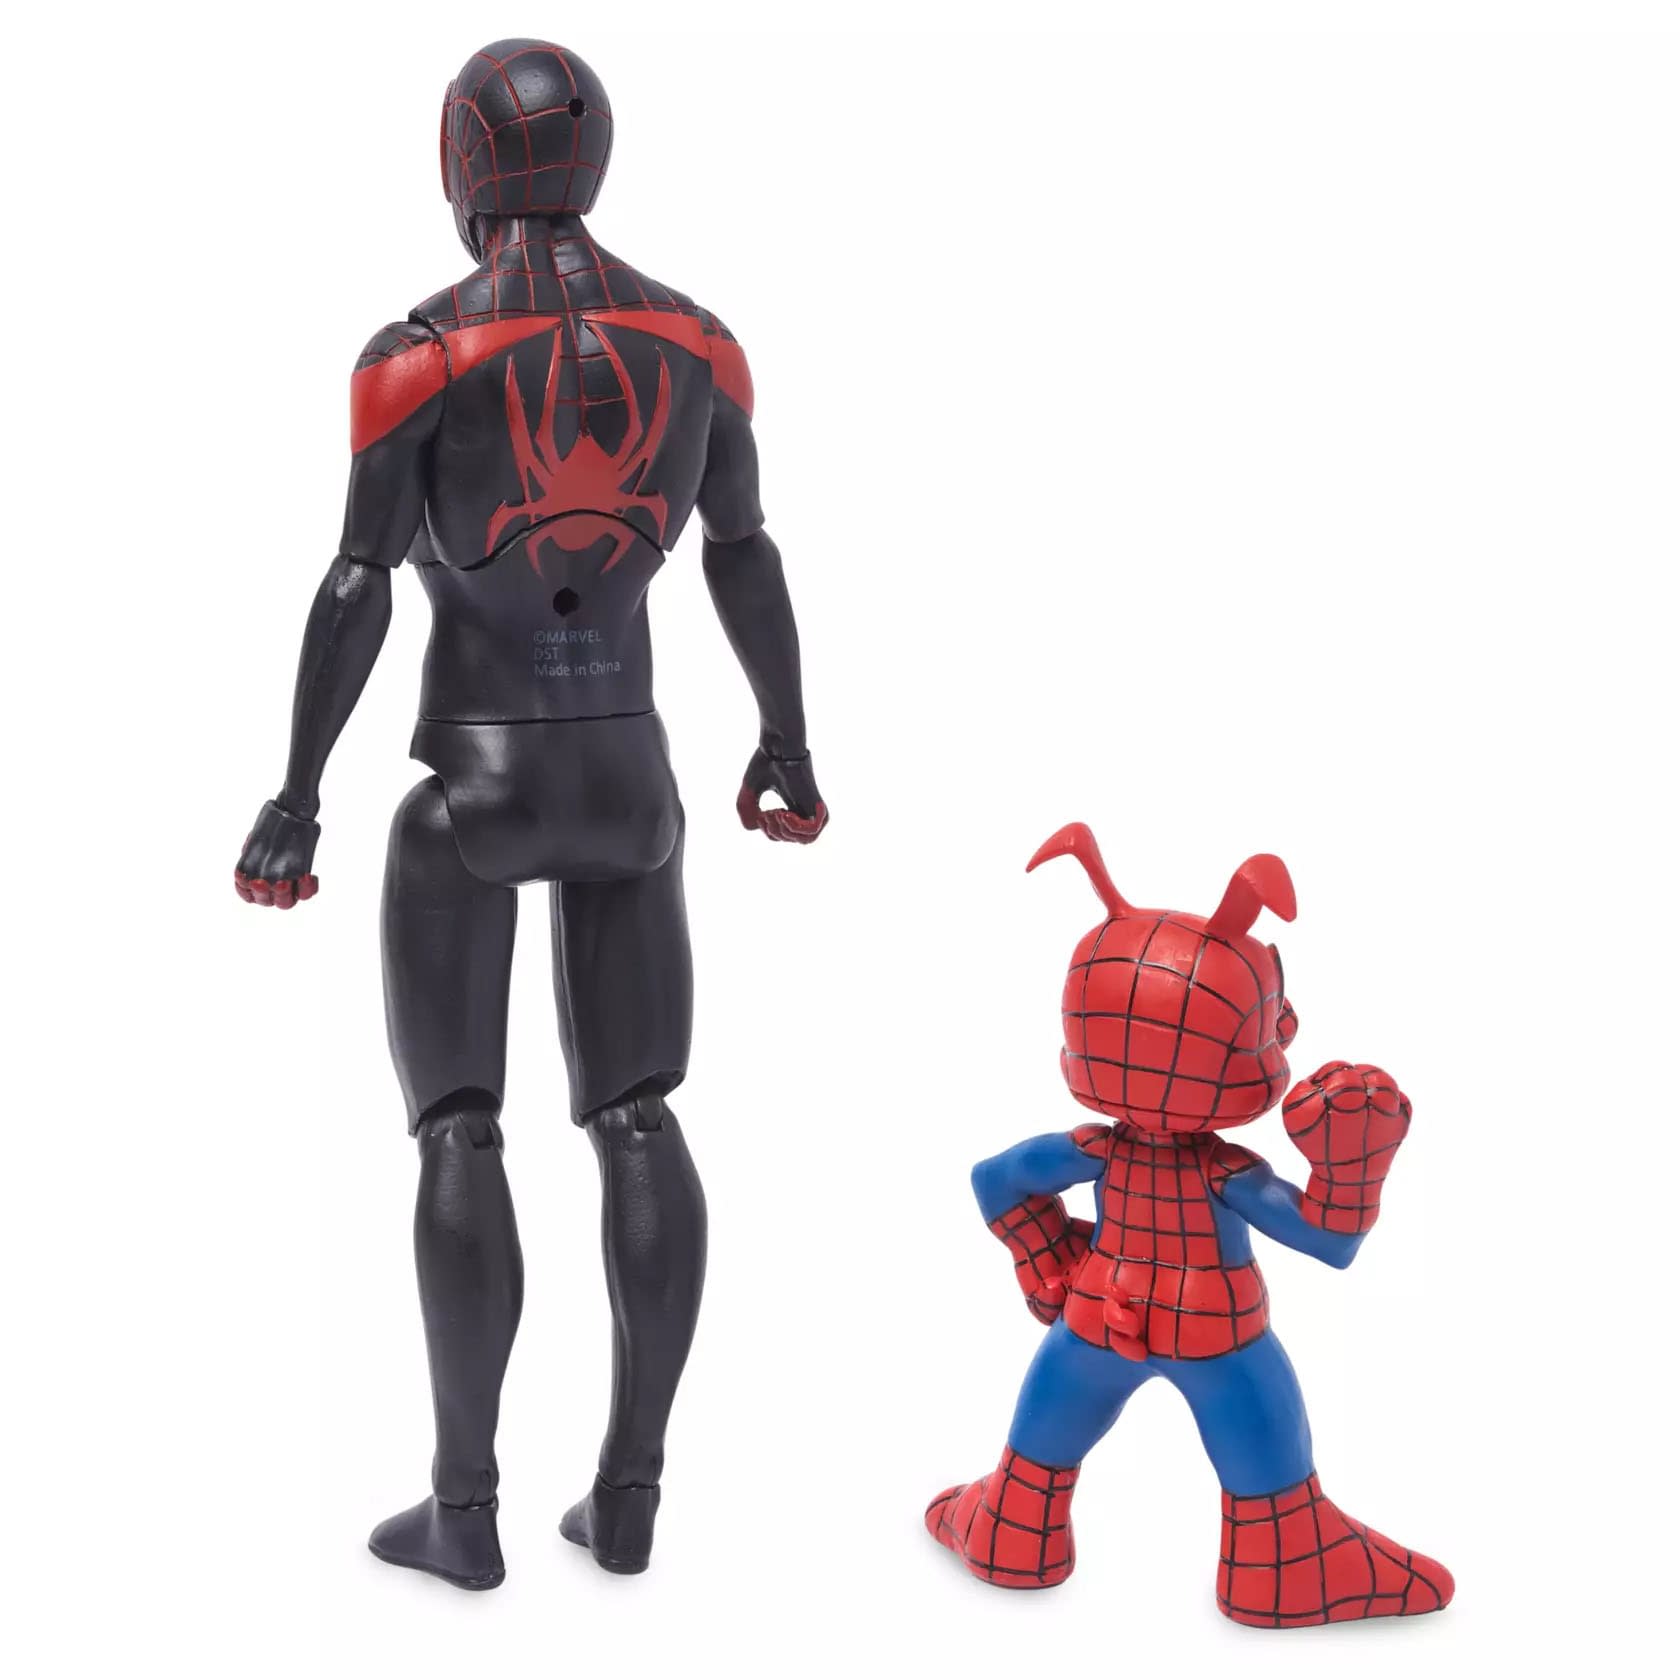 Diamond Select Toys Debuts Odd Spider-Man Miles Morales Figure